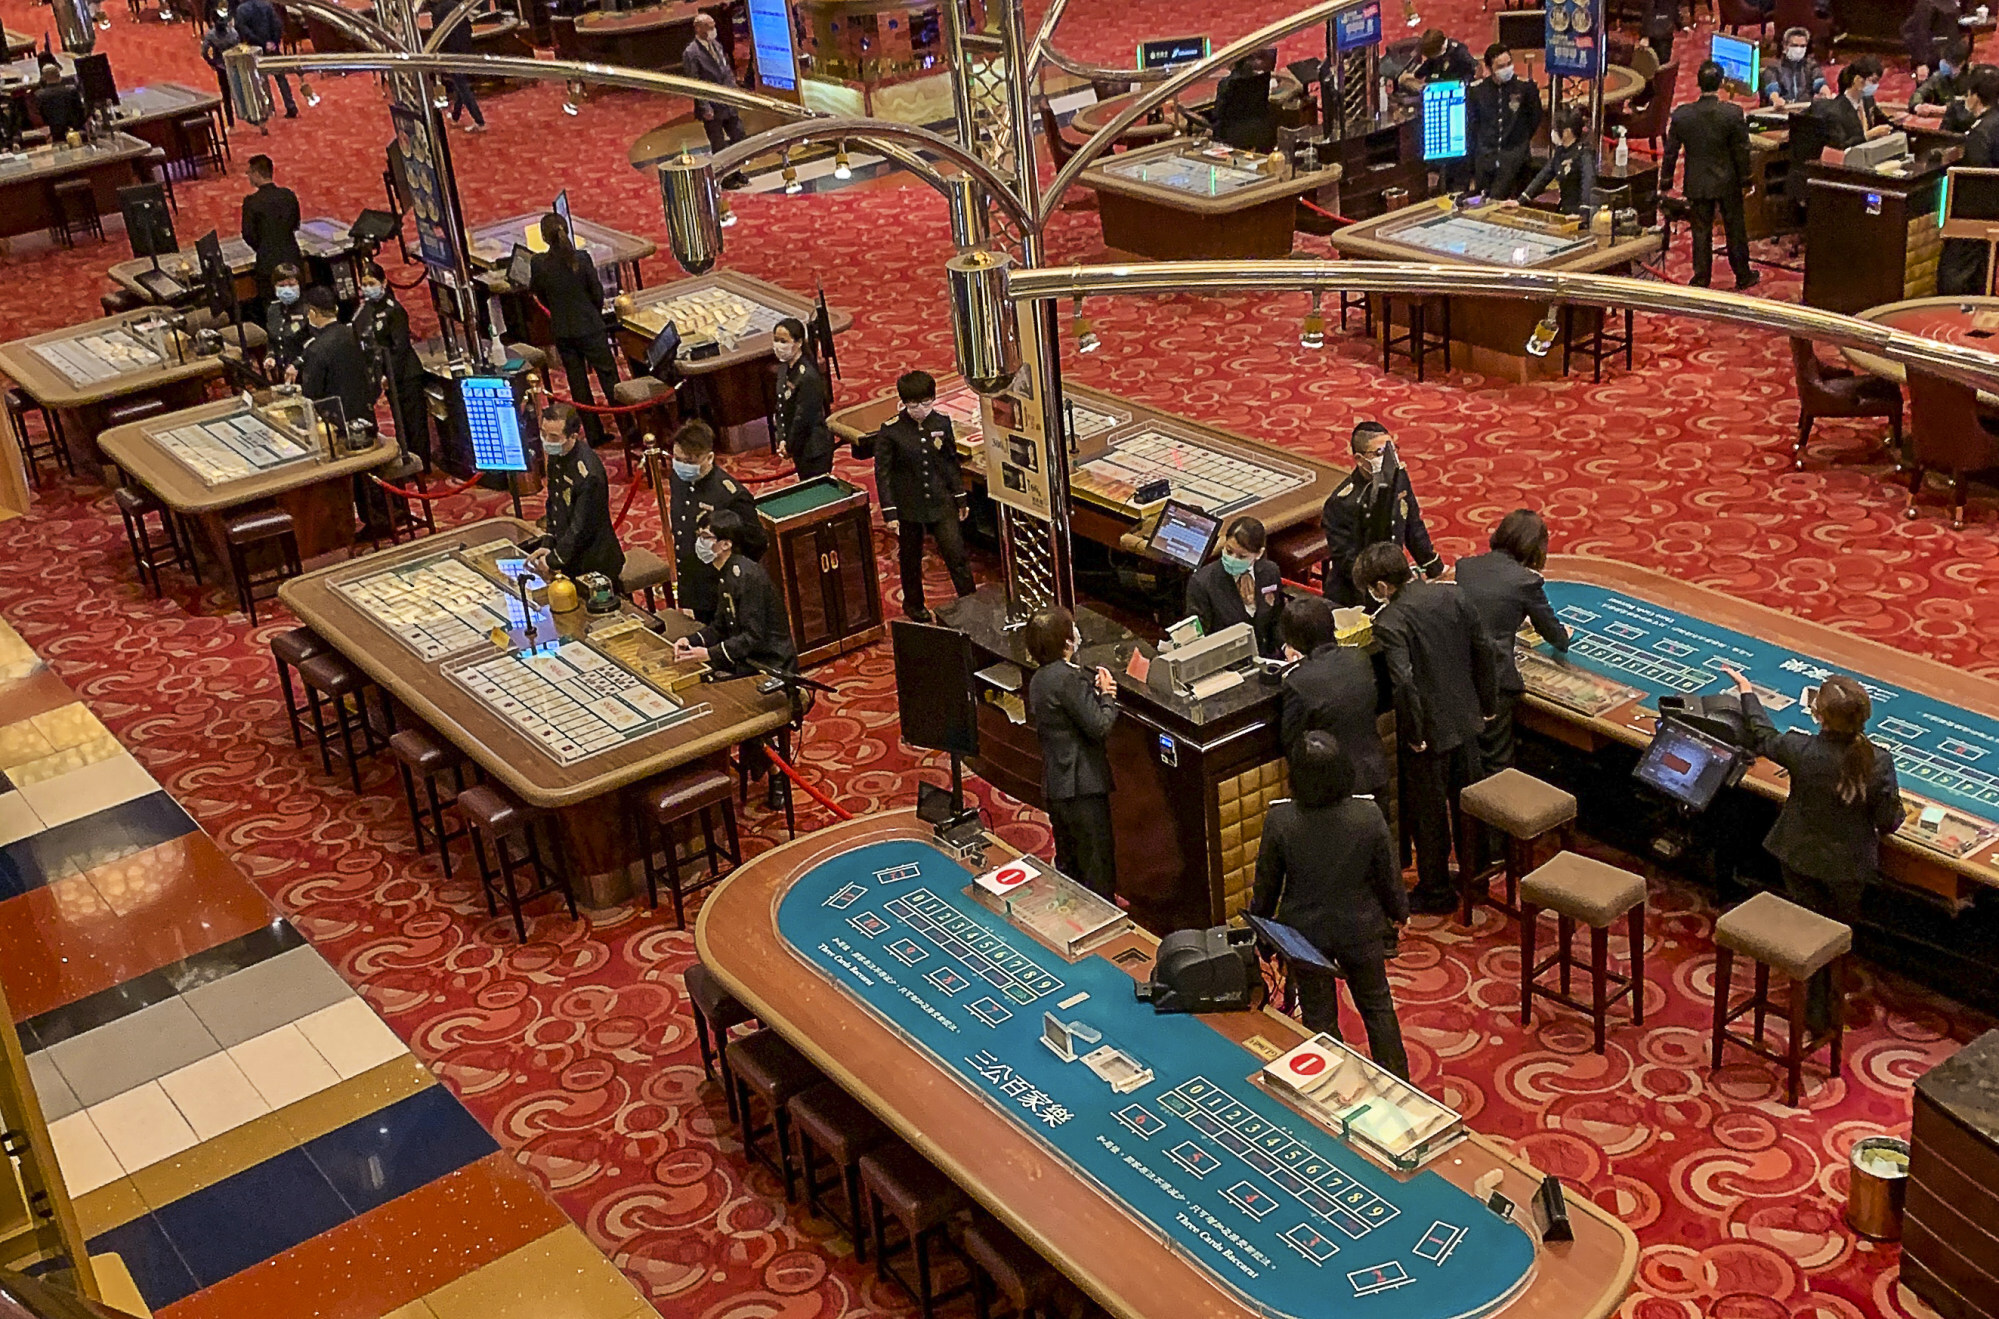 The gambling hall inside the Grand Lisboa casino in Macau on 20 February 2020. Photo: Handout